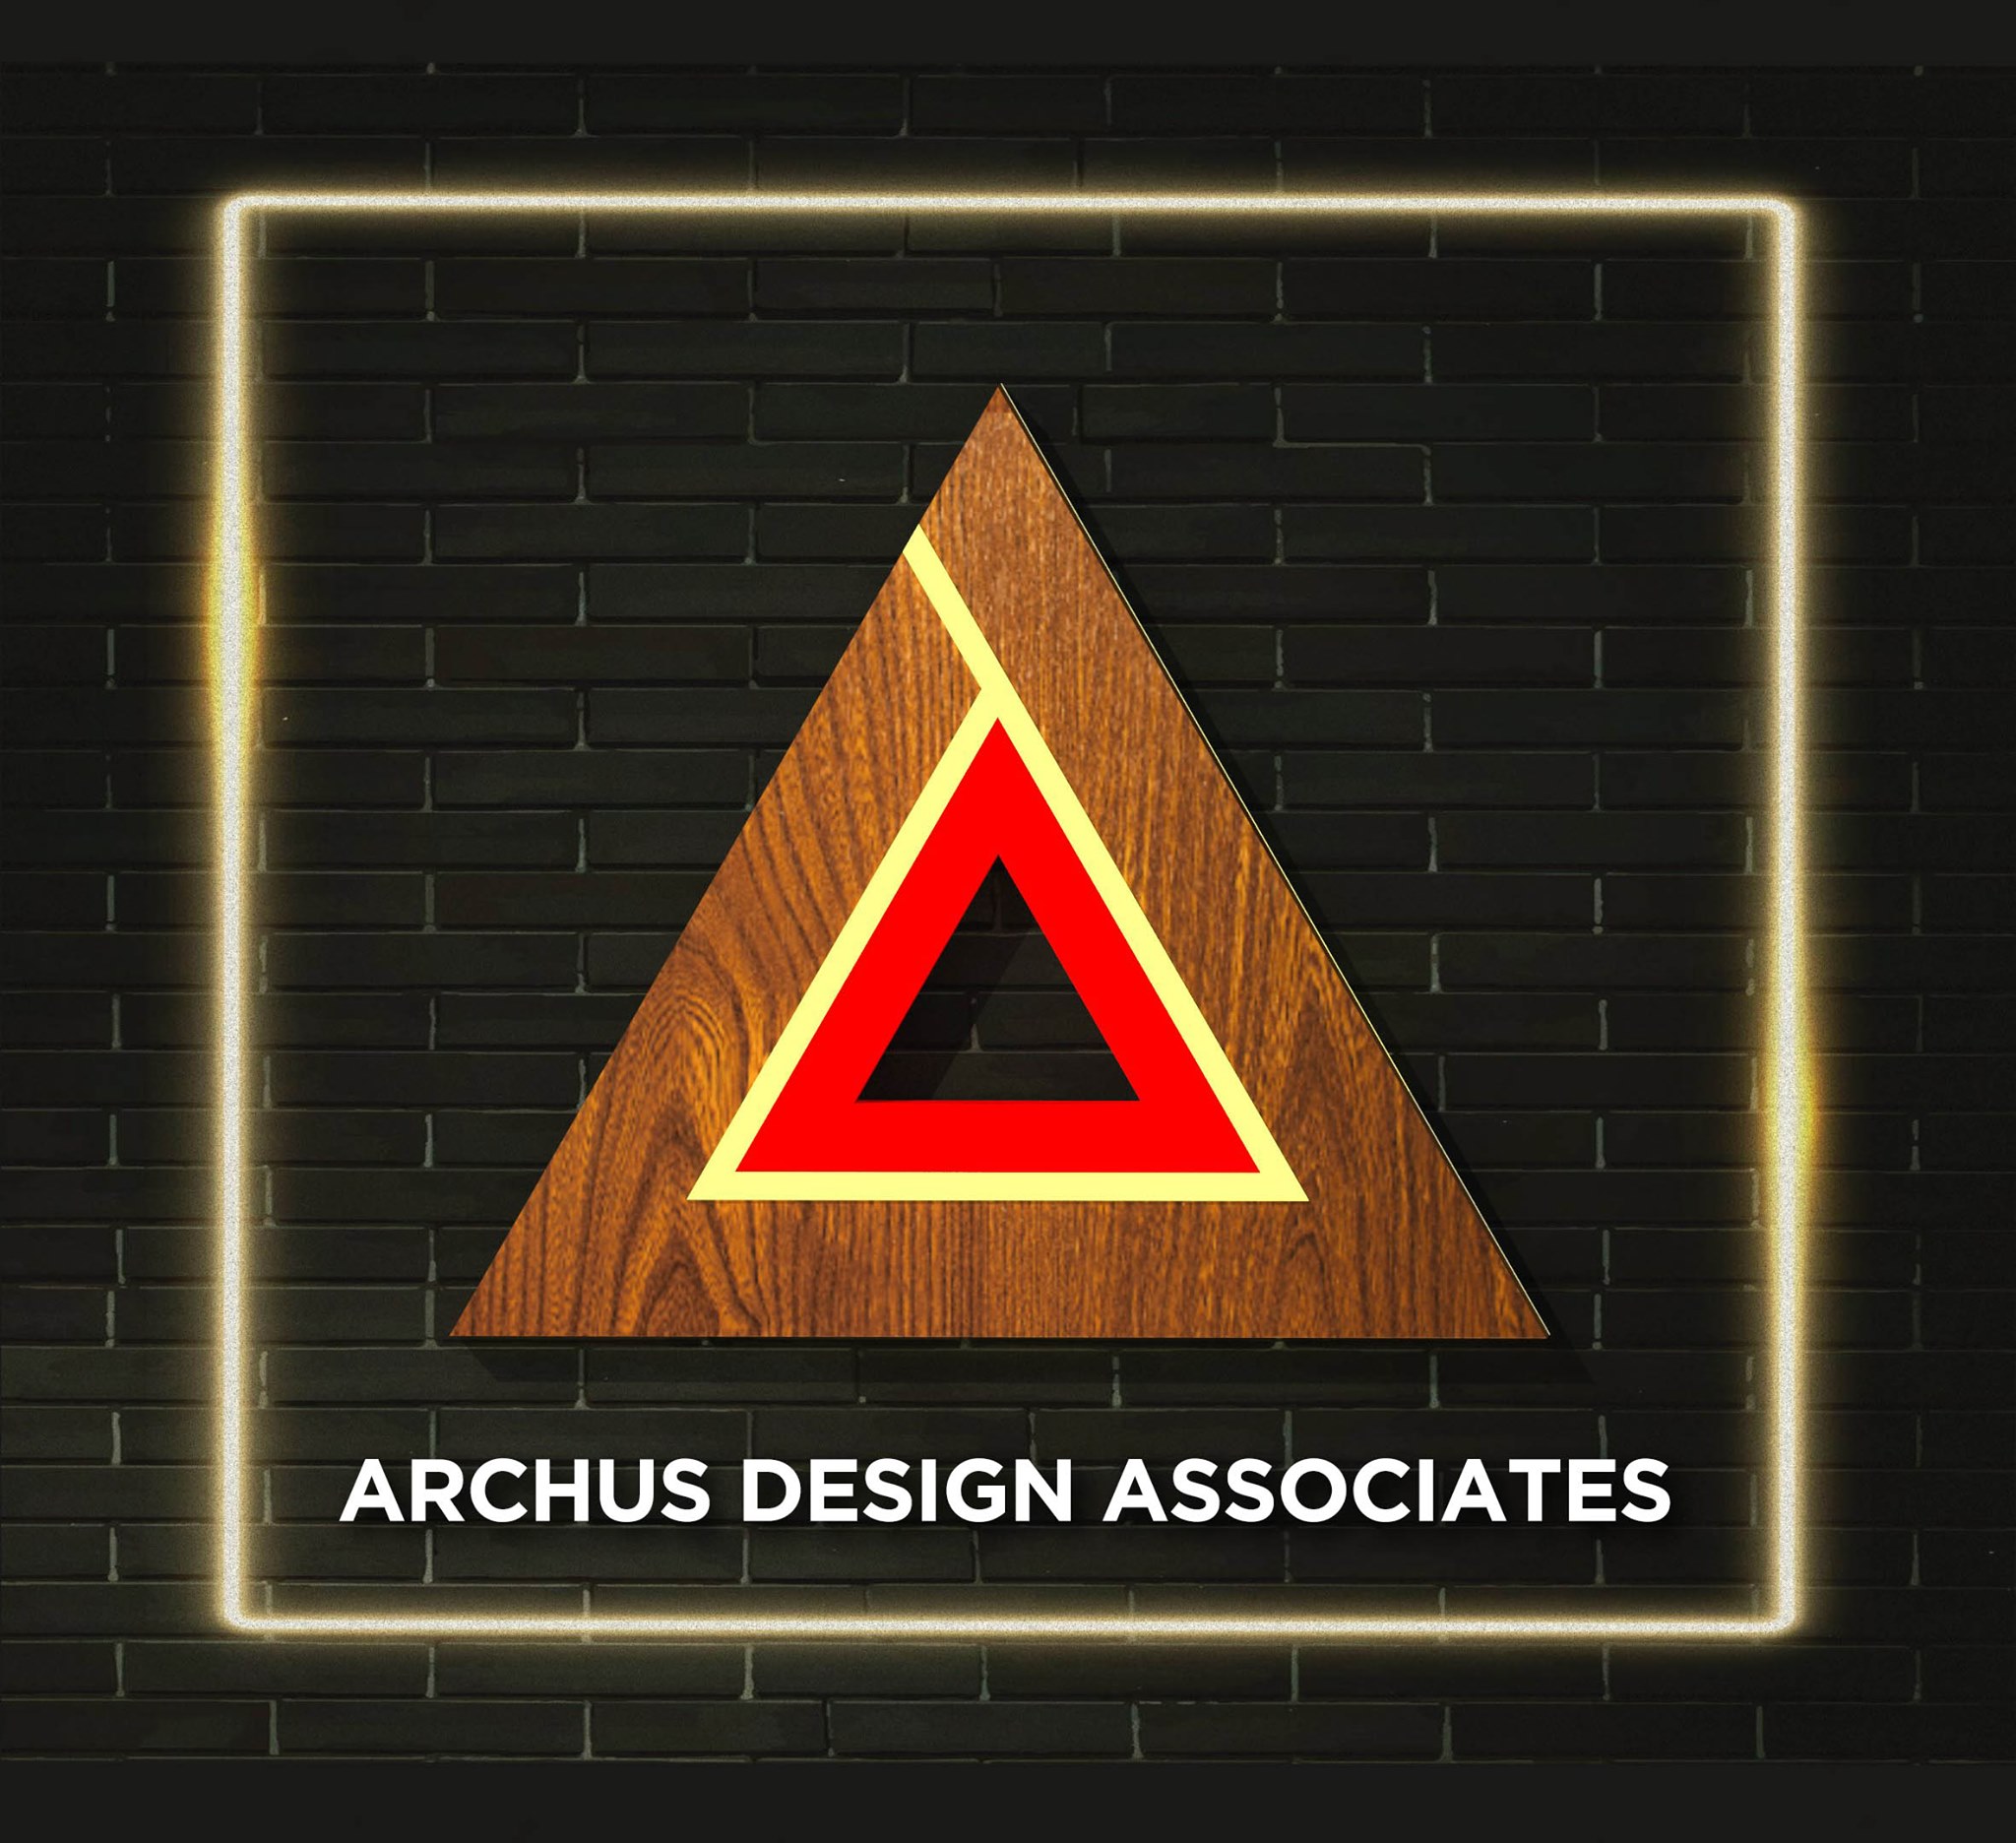 Archus Design Associates|Architect|Professional Services